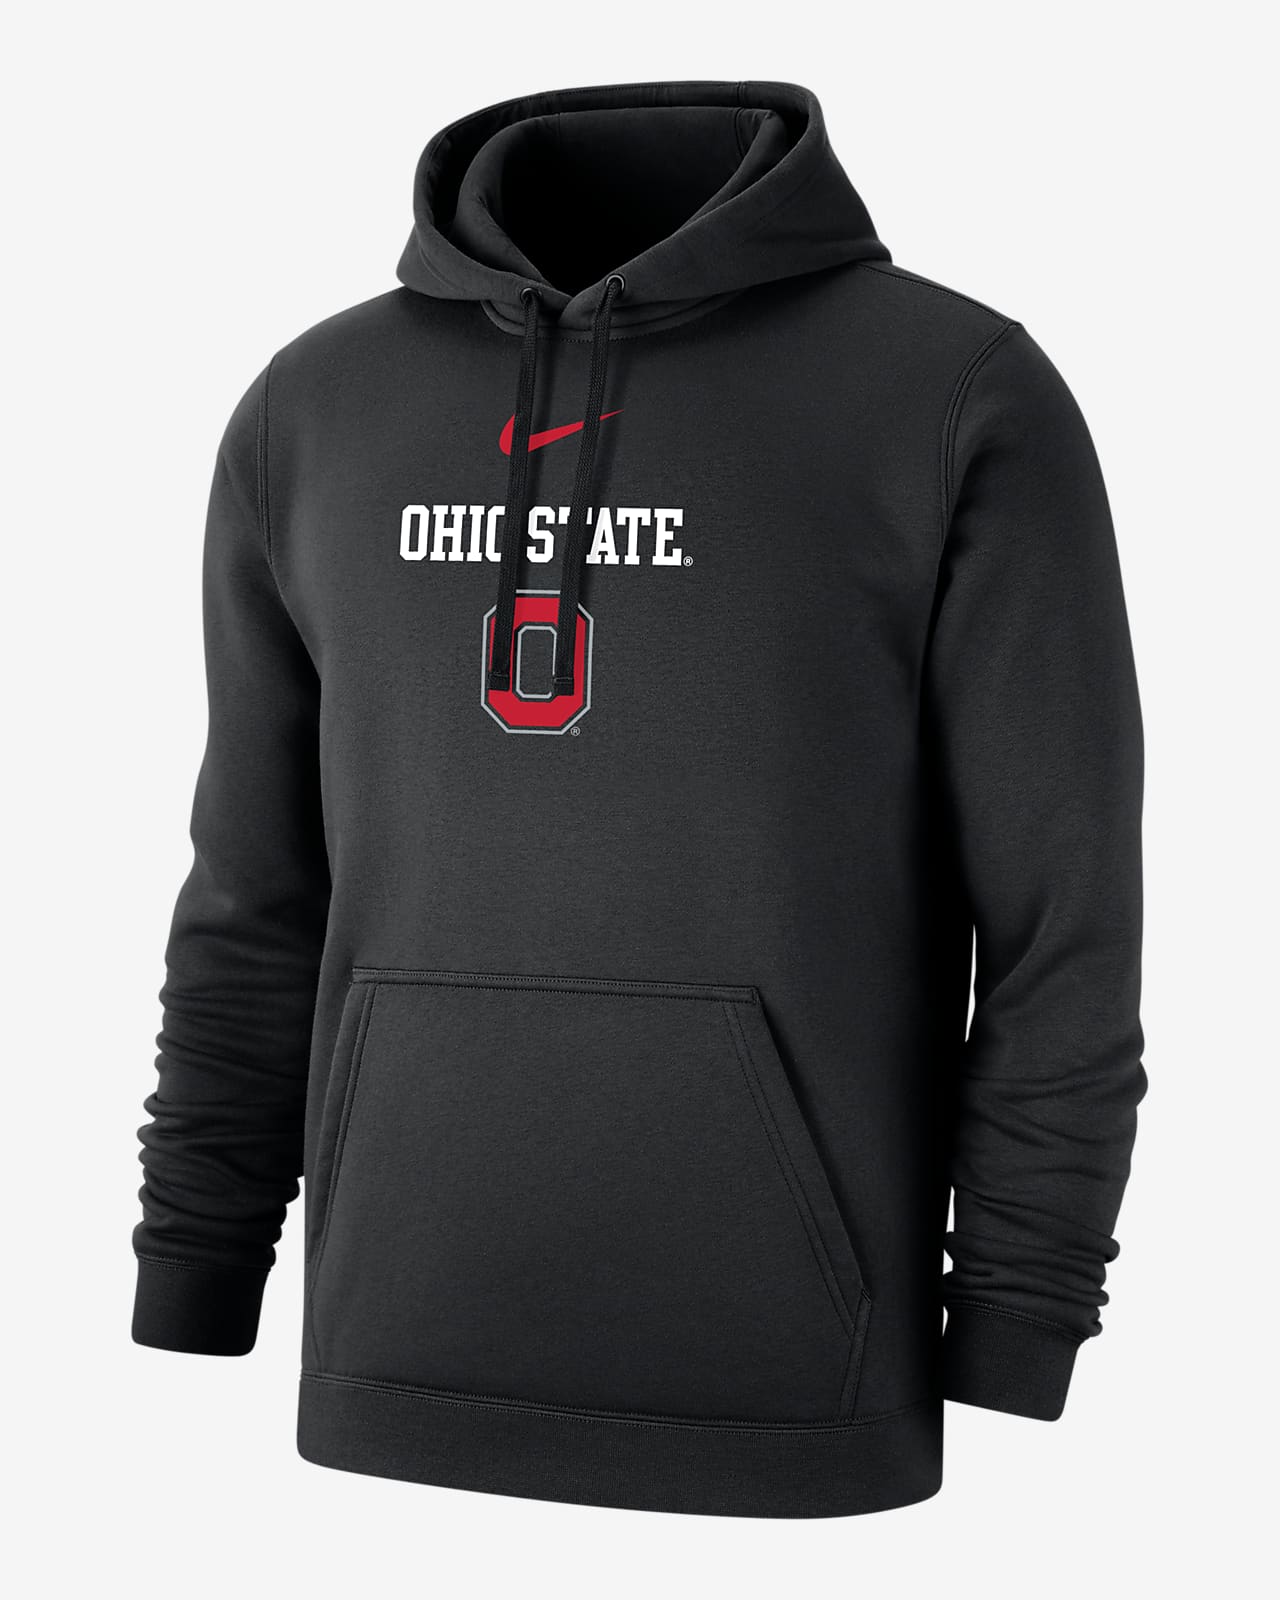 Ohio State Club Fleece Men's Nike College Hoodie